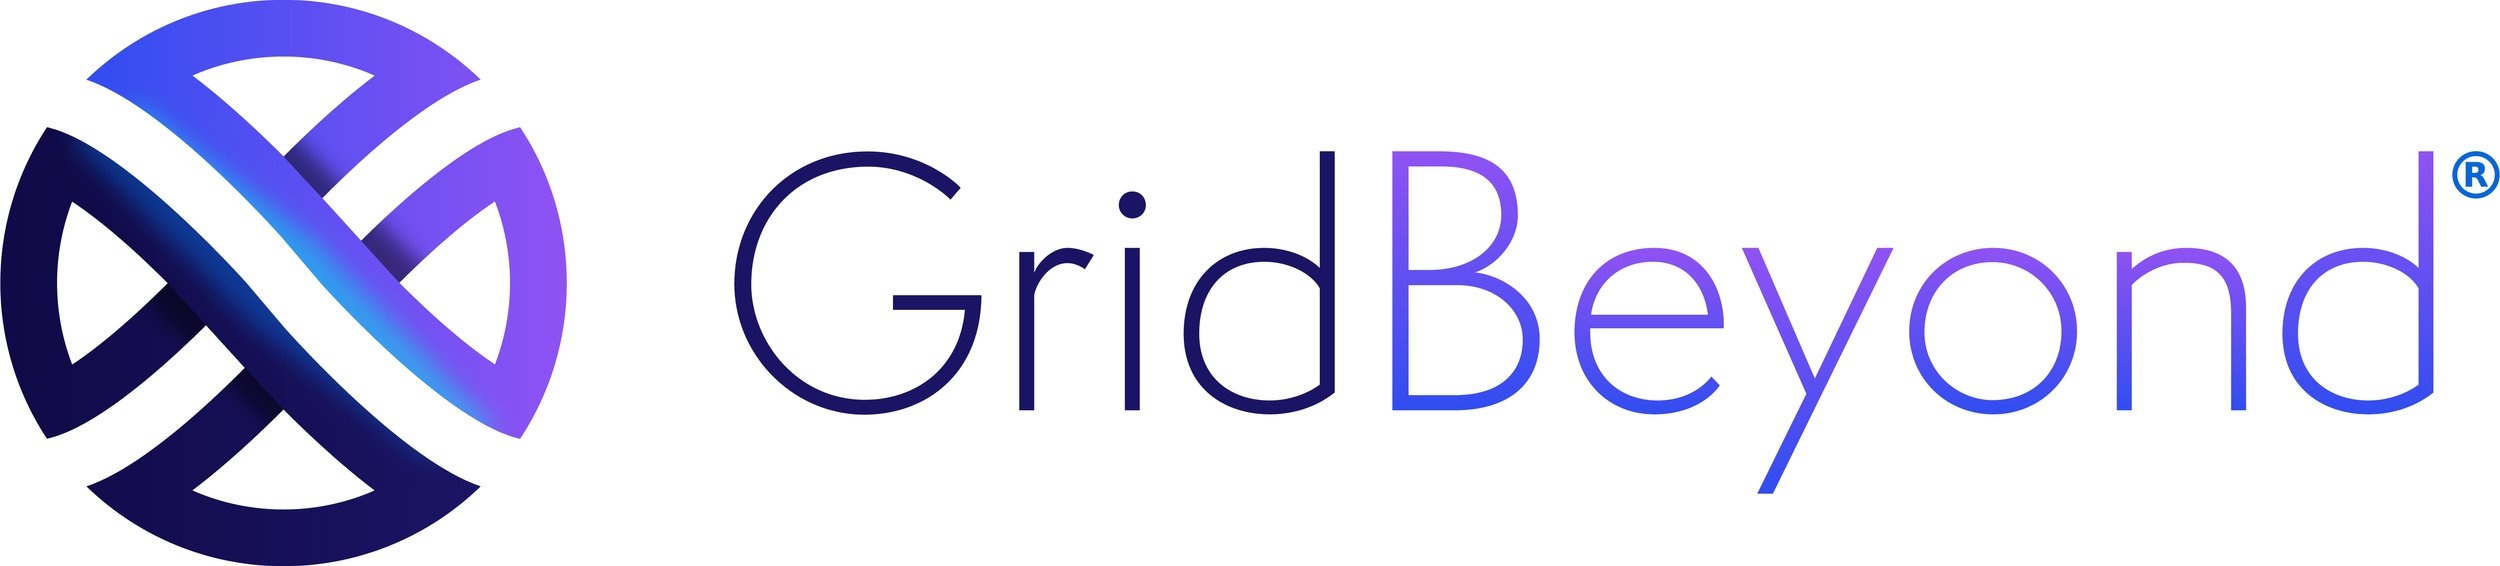 GridBeyond_Logo_RGB_Wide_Primary.jpg